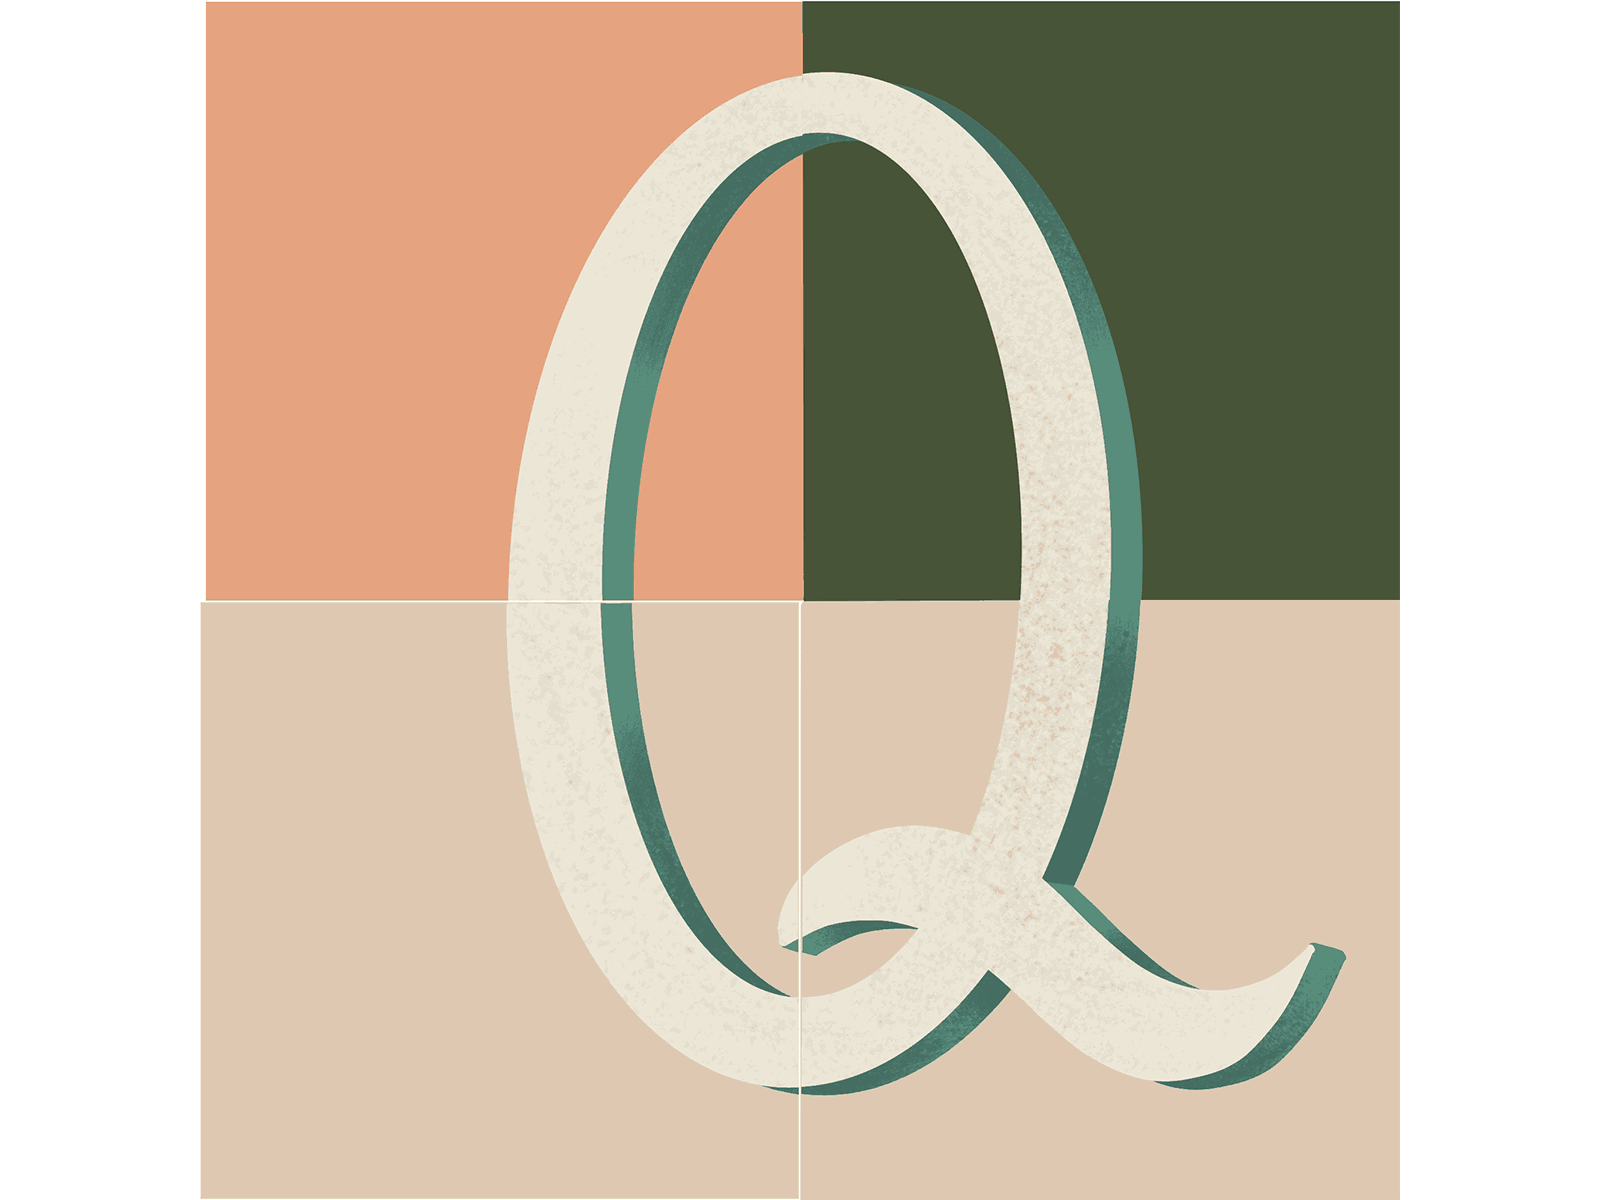 Q is for Quadrant